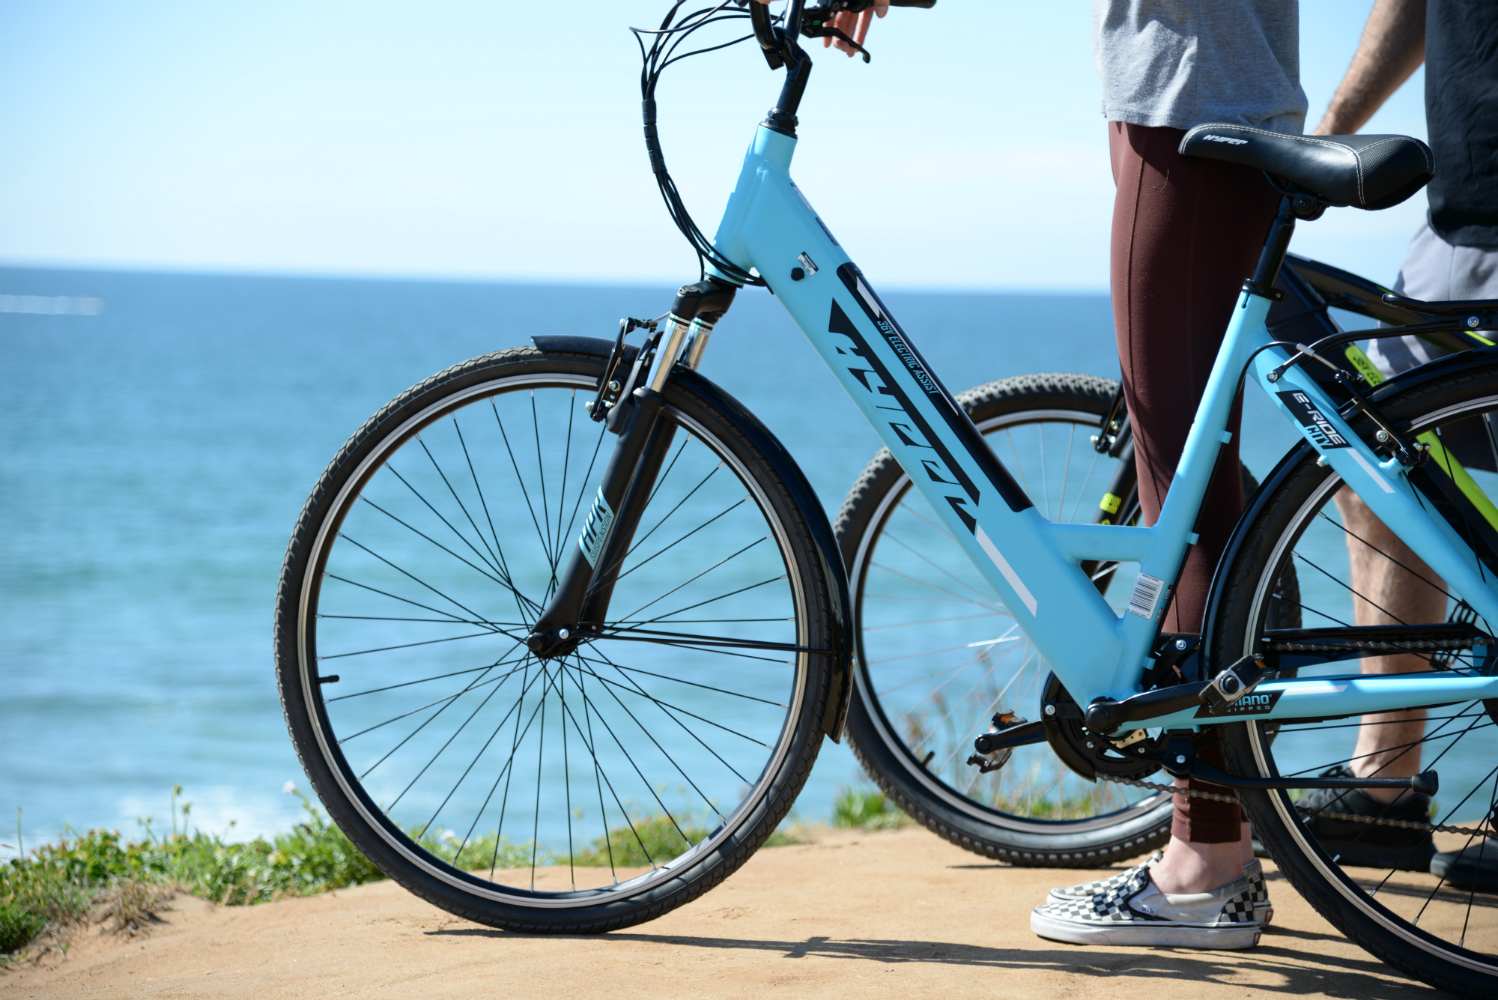 walmart slashes prices on hyper e ride electric hybrid bikes blue bike 700c wheels 17